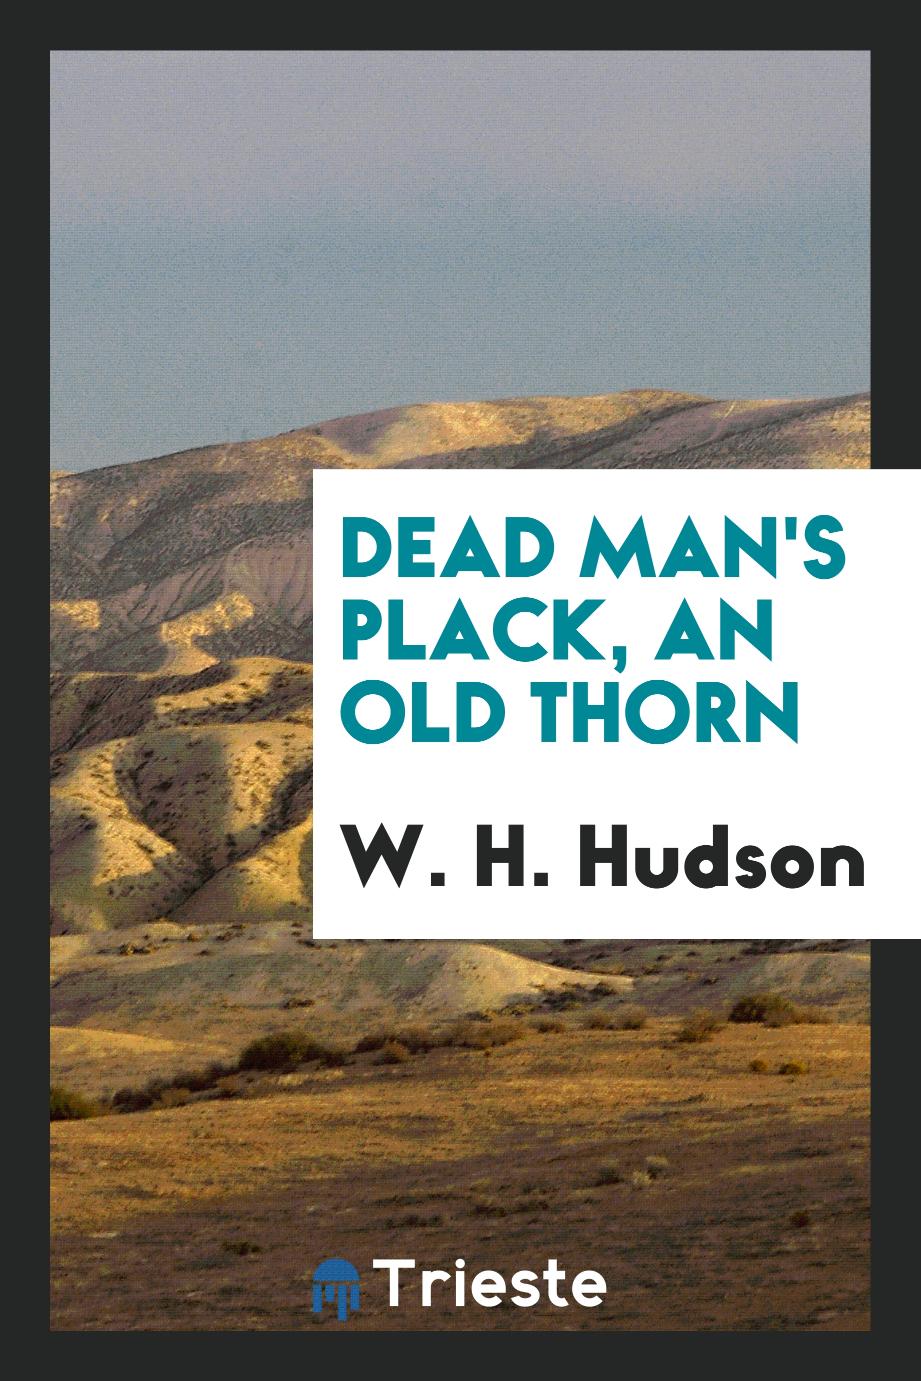 Dead man's plack, An old thorn